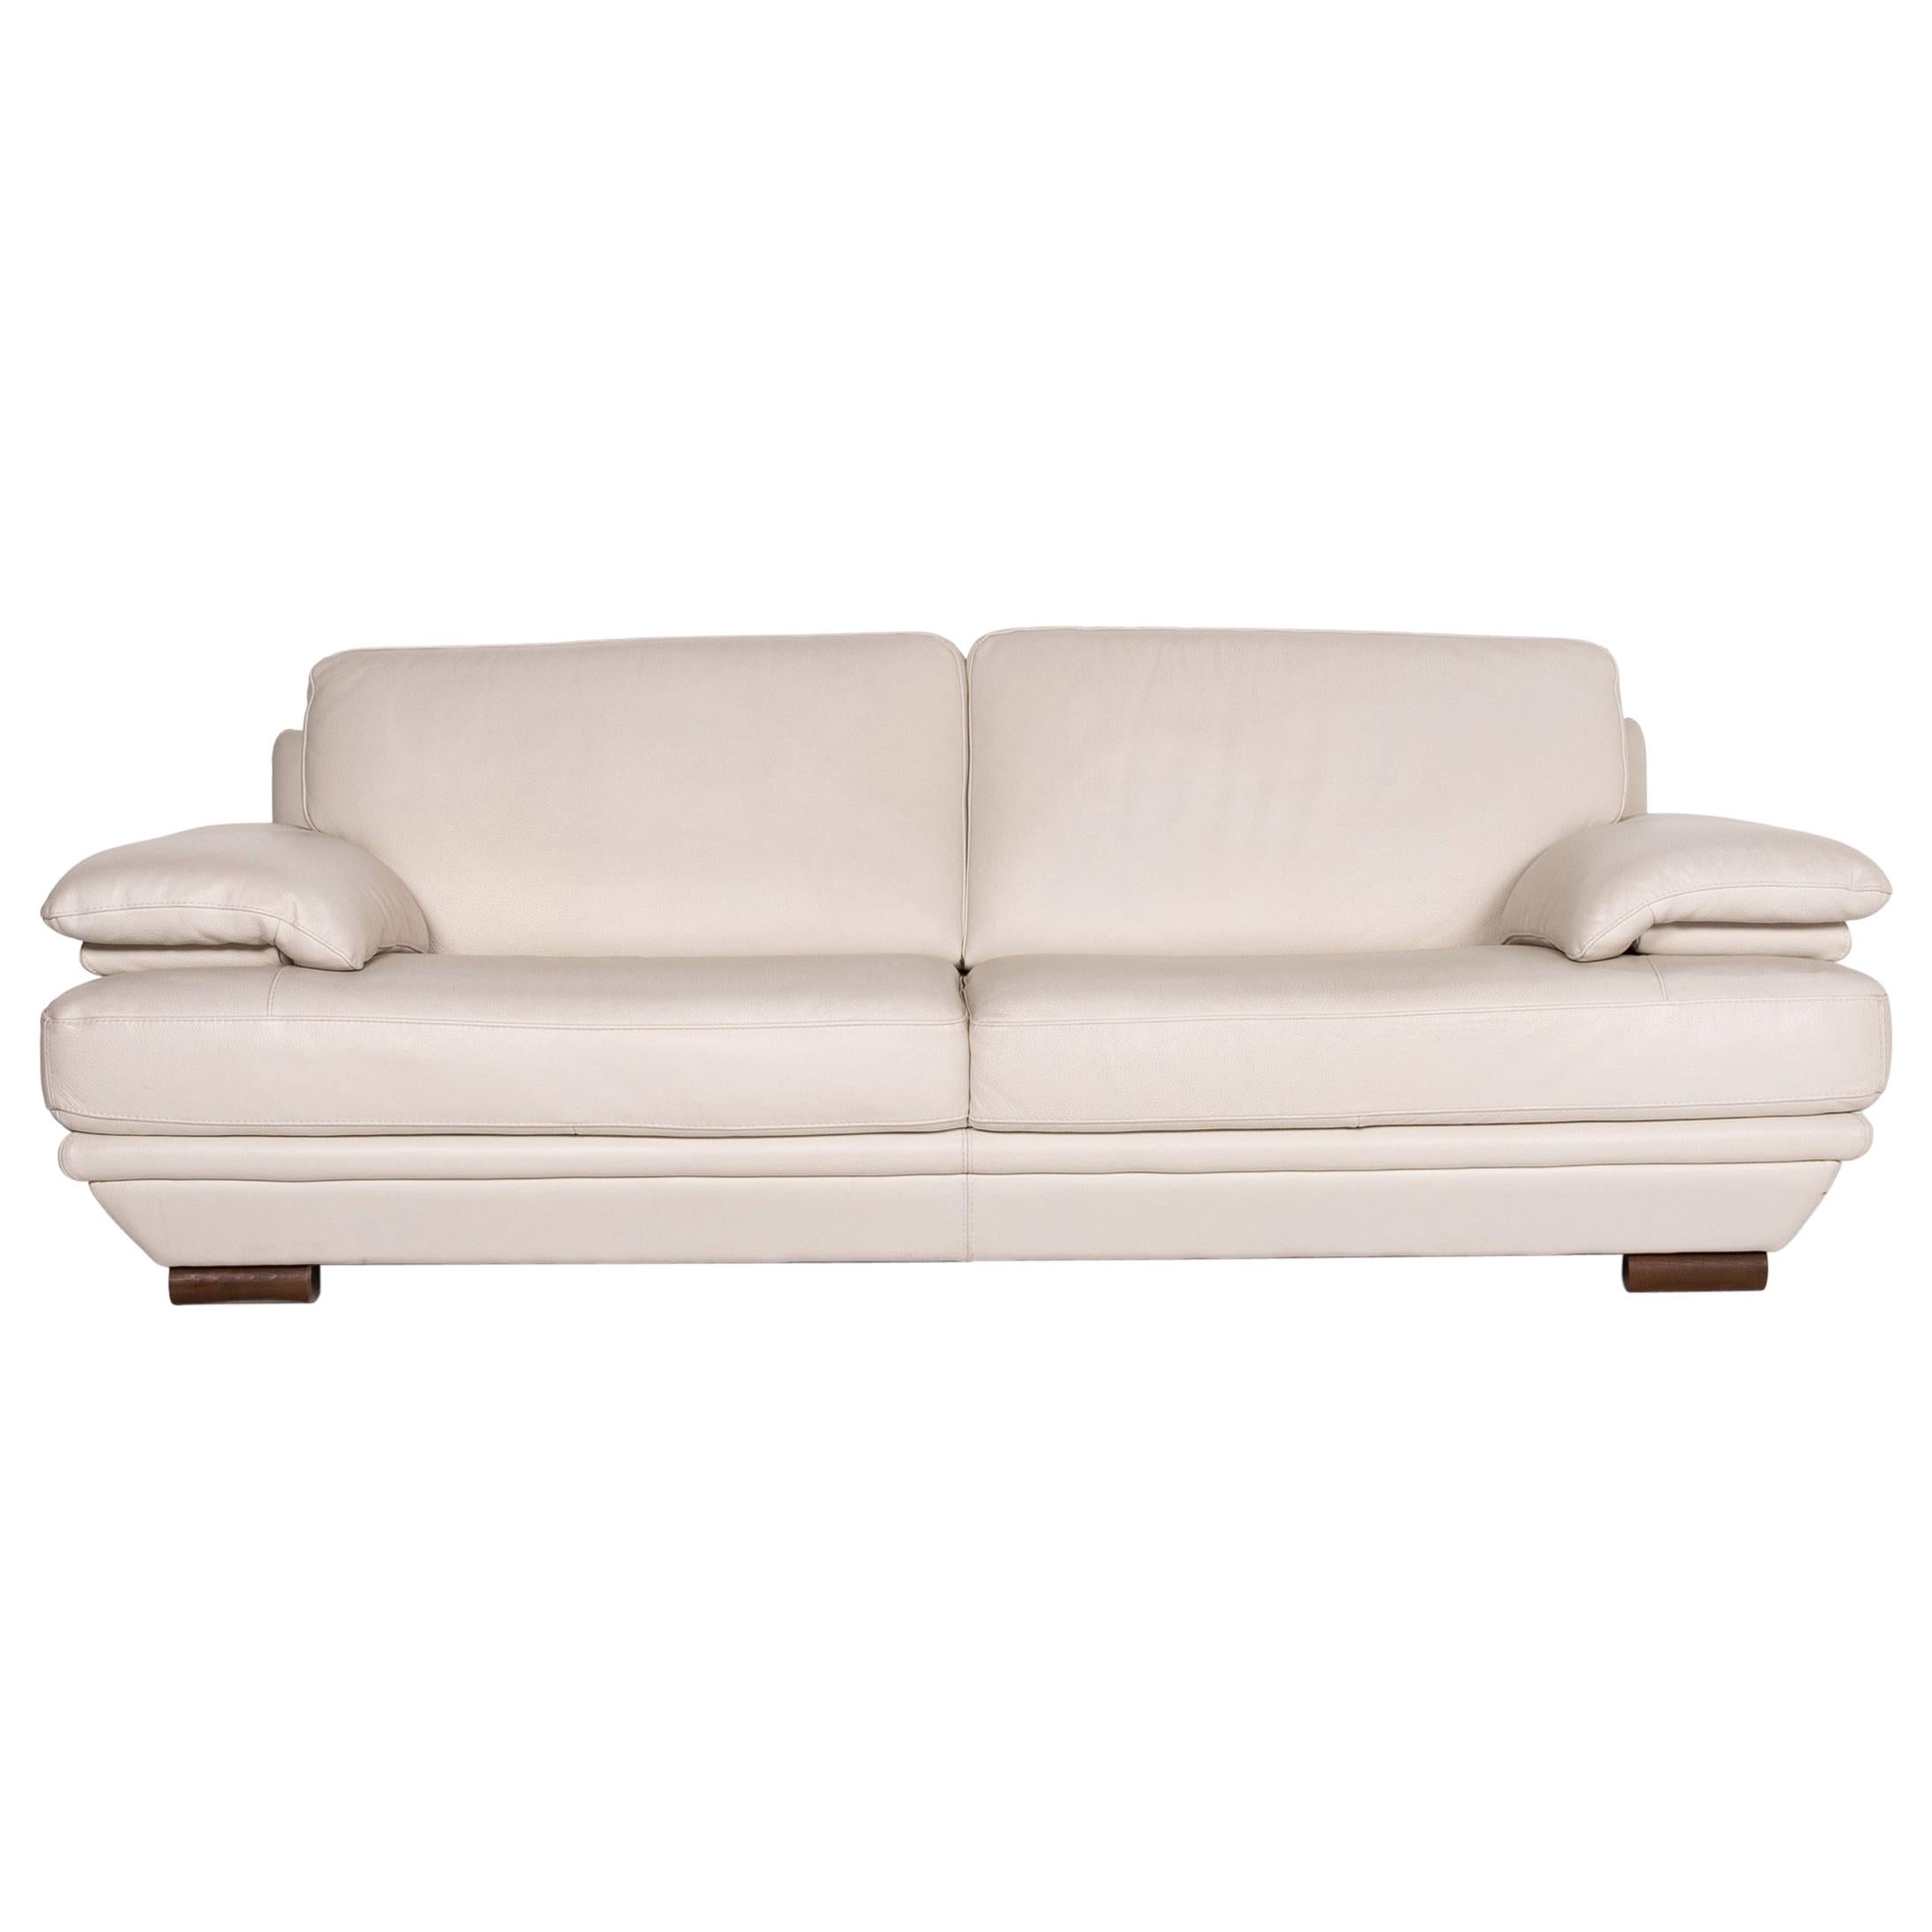 Natuzzi Leather Sofa Cream Three-Seat Couch